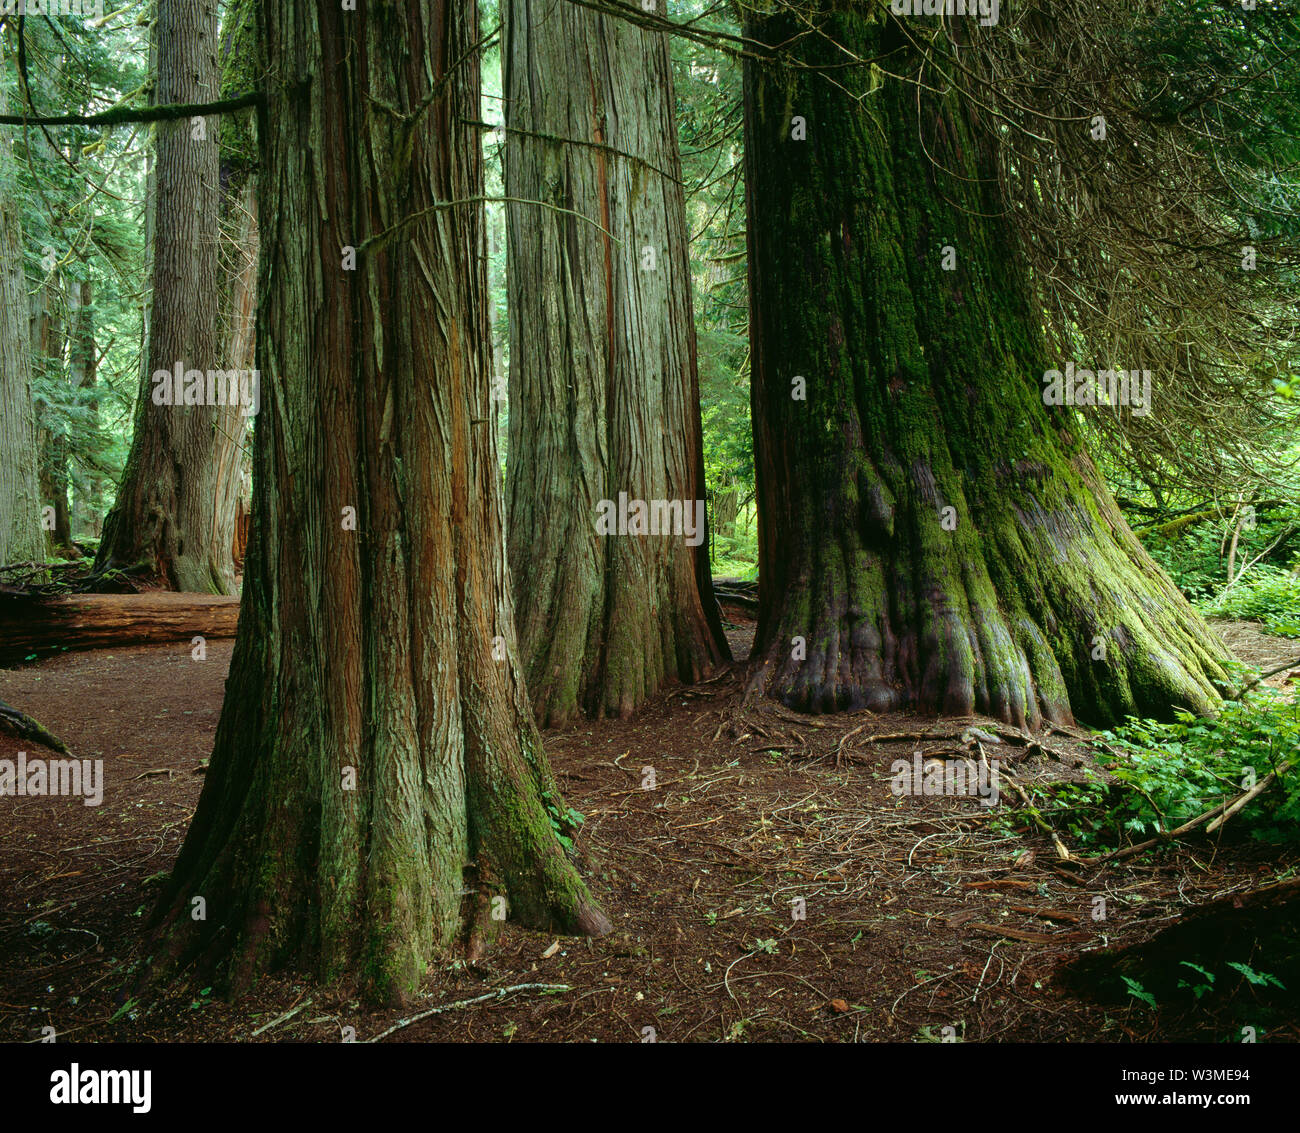 USA, Washington, Mt. Rainier National Park, Grove of ancient western red cedars (Thuja plicata) near the Ohanepecosh River. Stock Photo